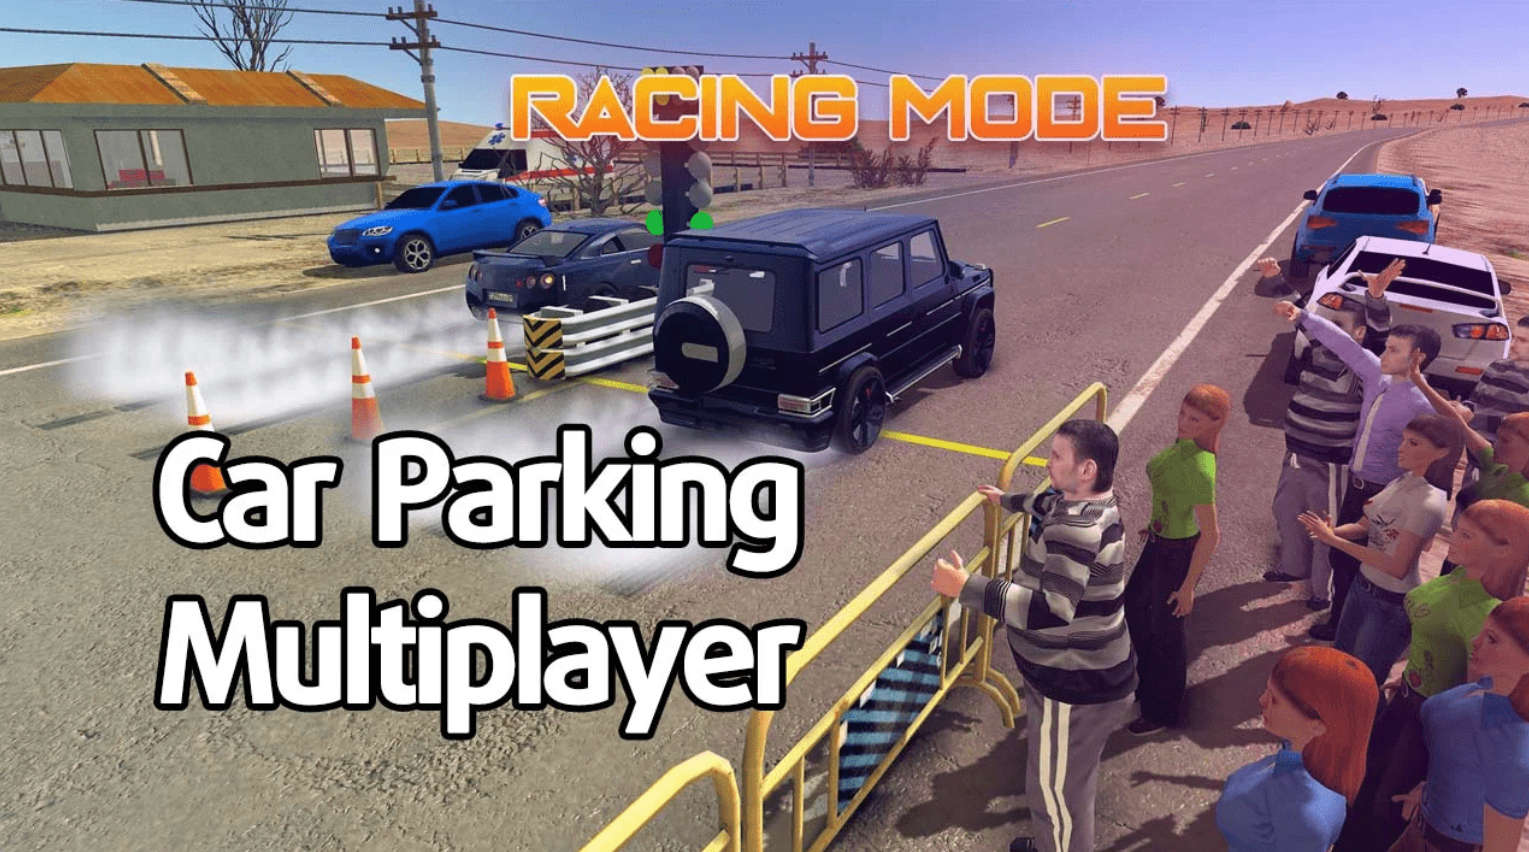 Car Parking Multi-Player MOD on iOS